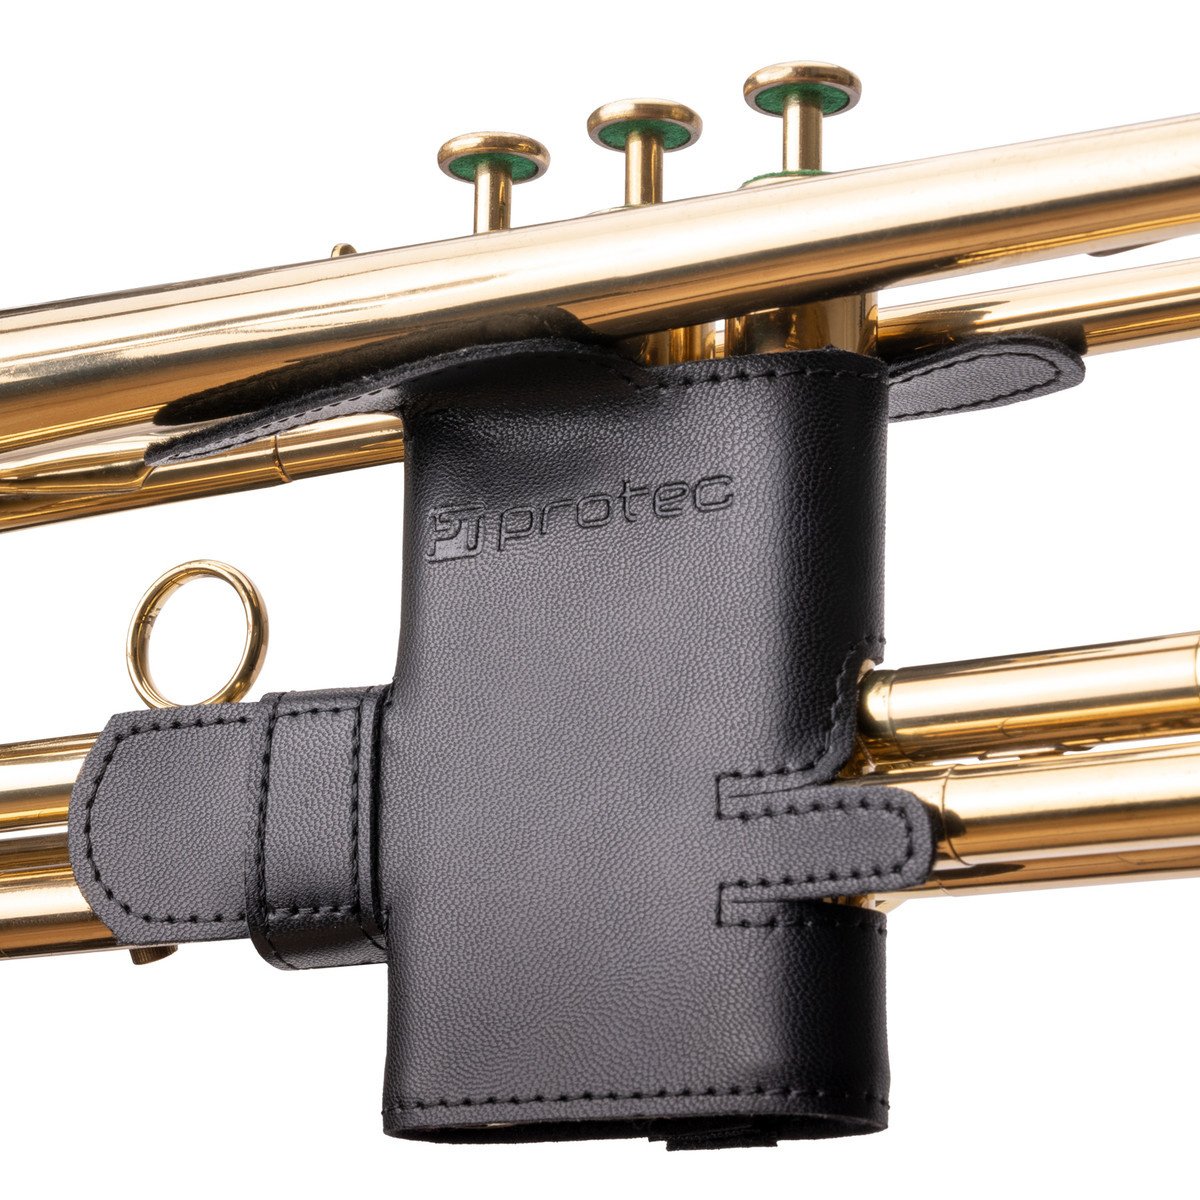 Protec Protec L226 Leather Trumpet Valve Guard